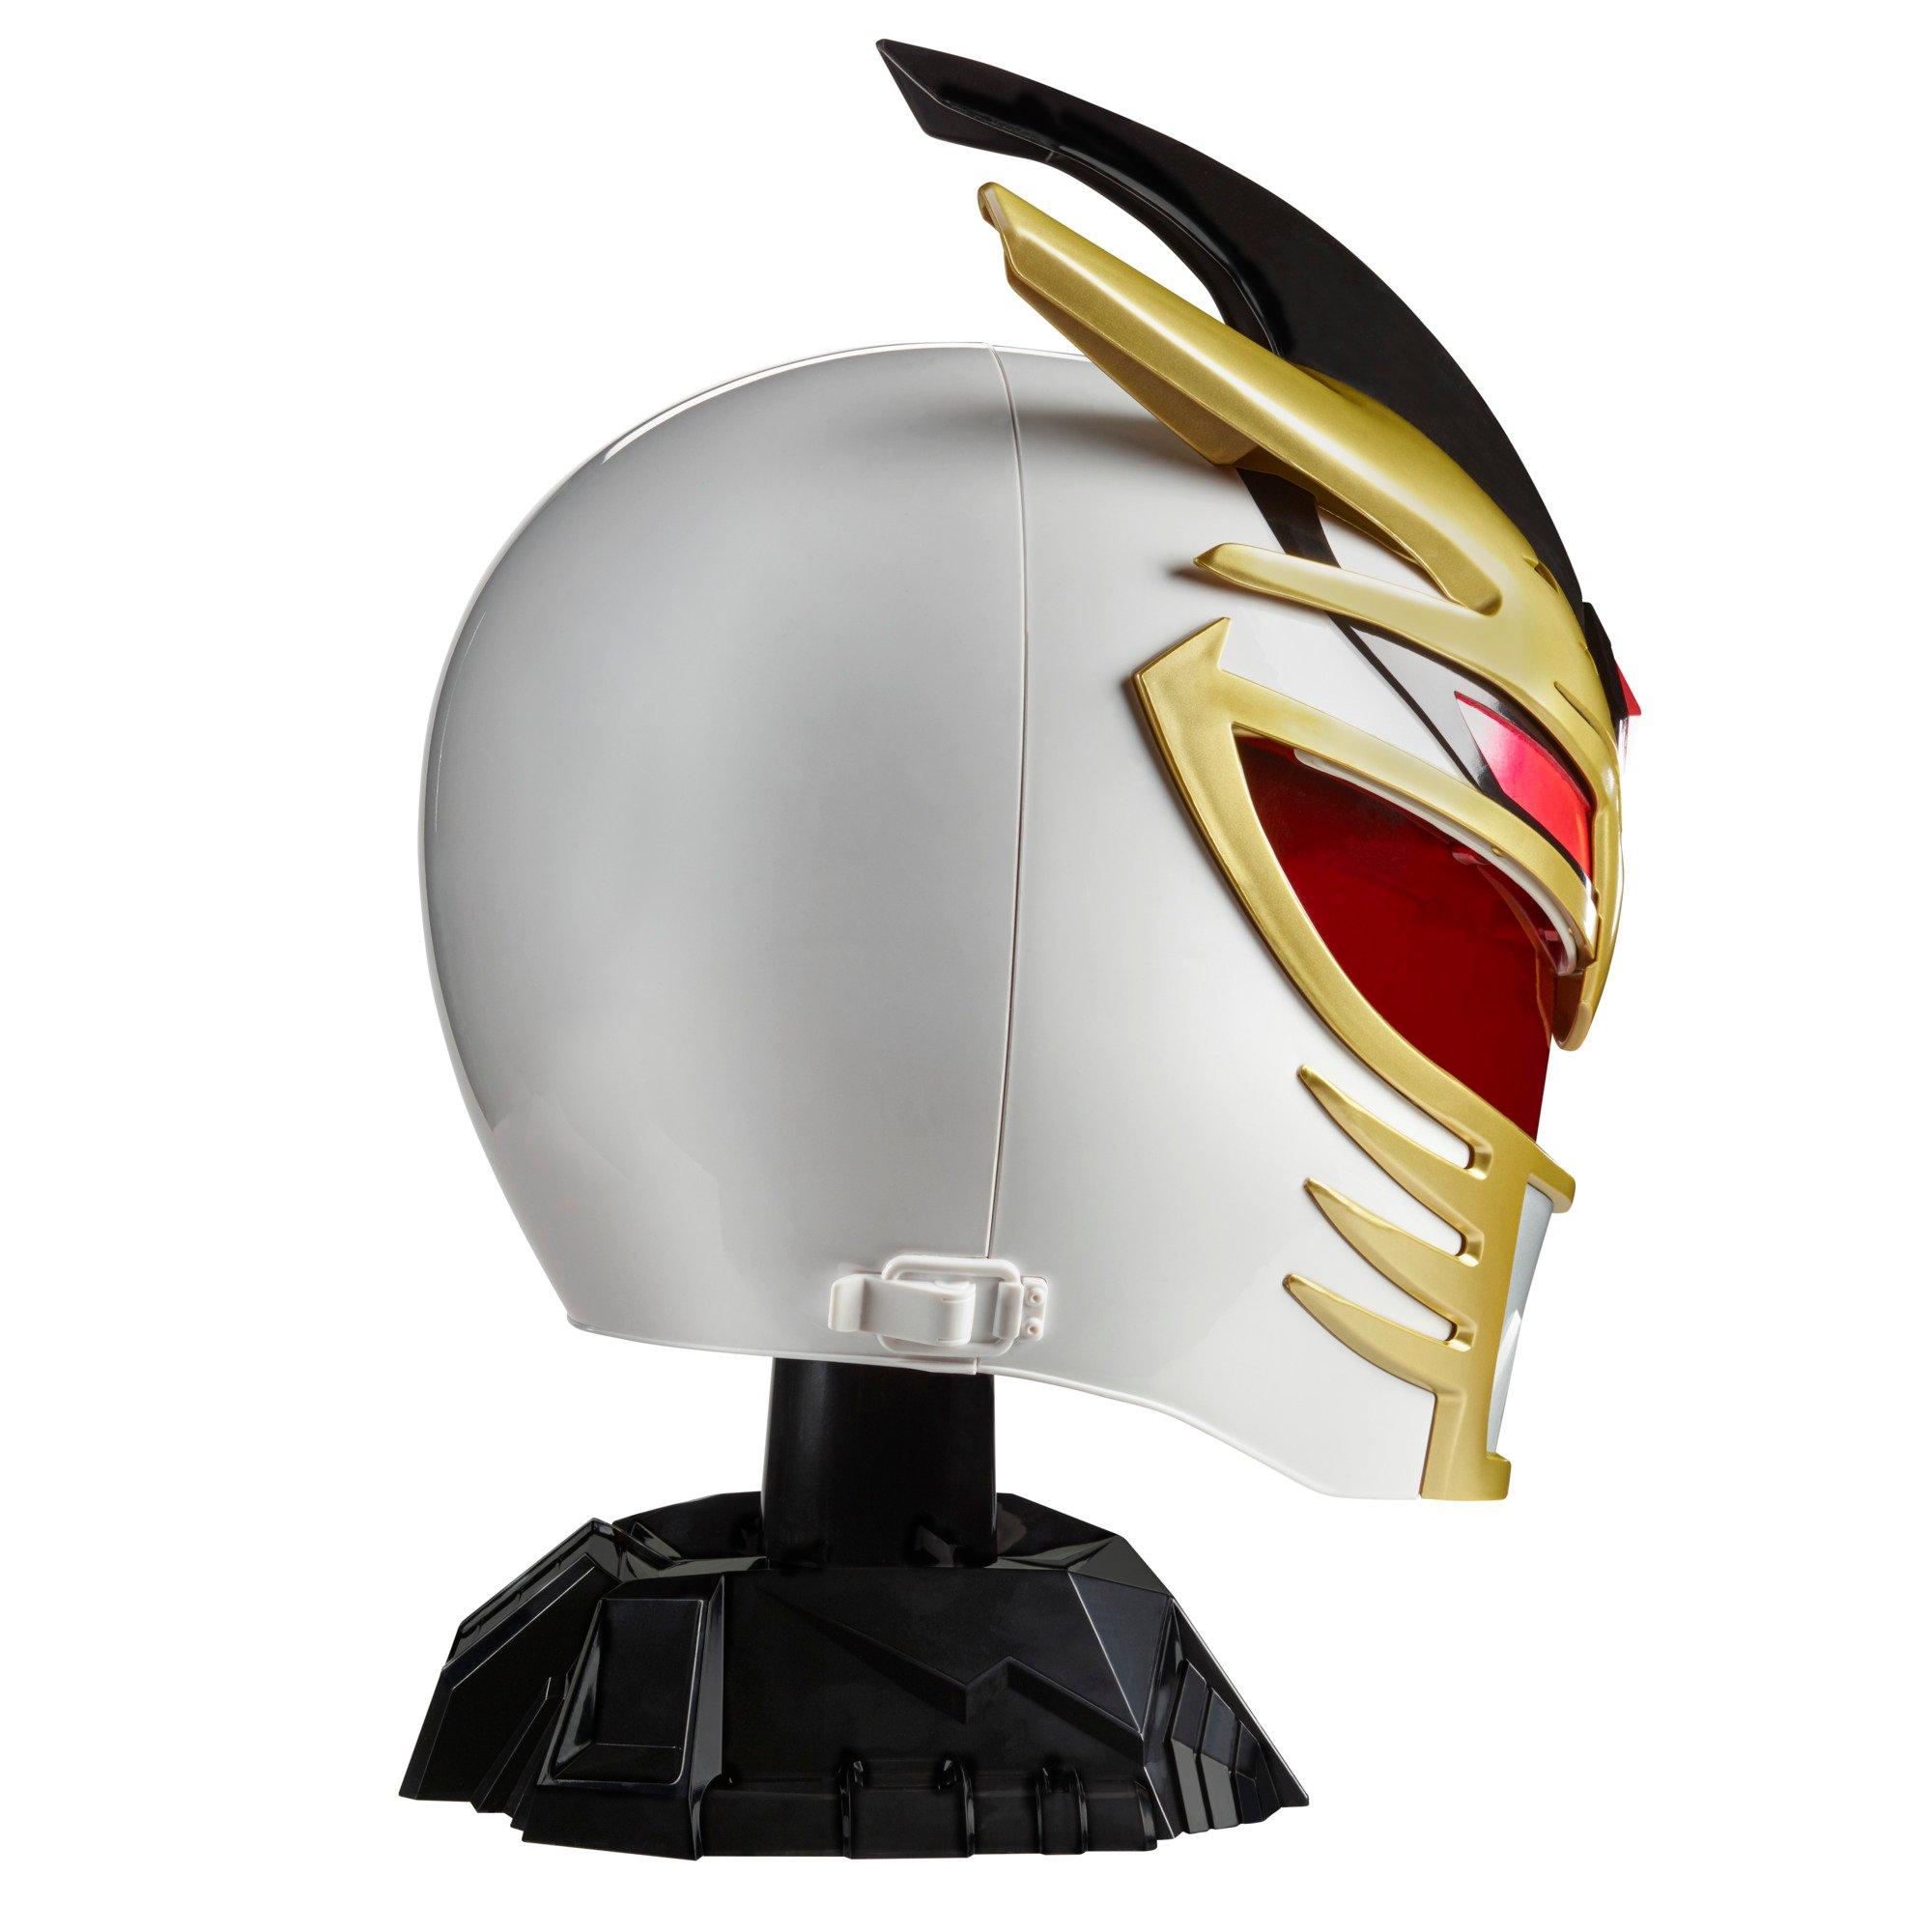 list item 4 of 15 Power Rangers Lightning Collection Premium Mighty Morphin Lord Drakkon Full Scale Helmet GameStop Exclusive